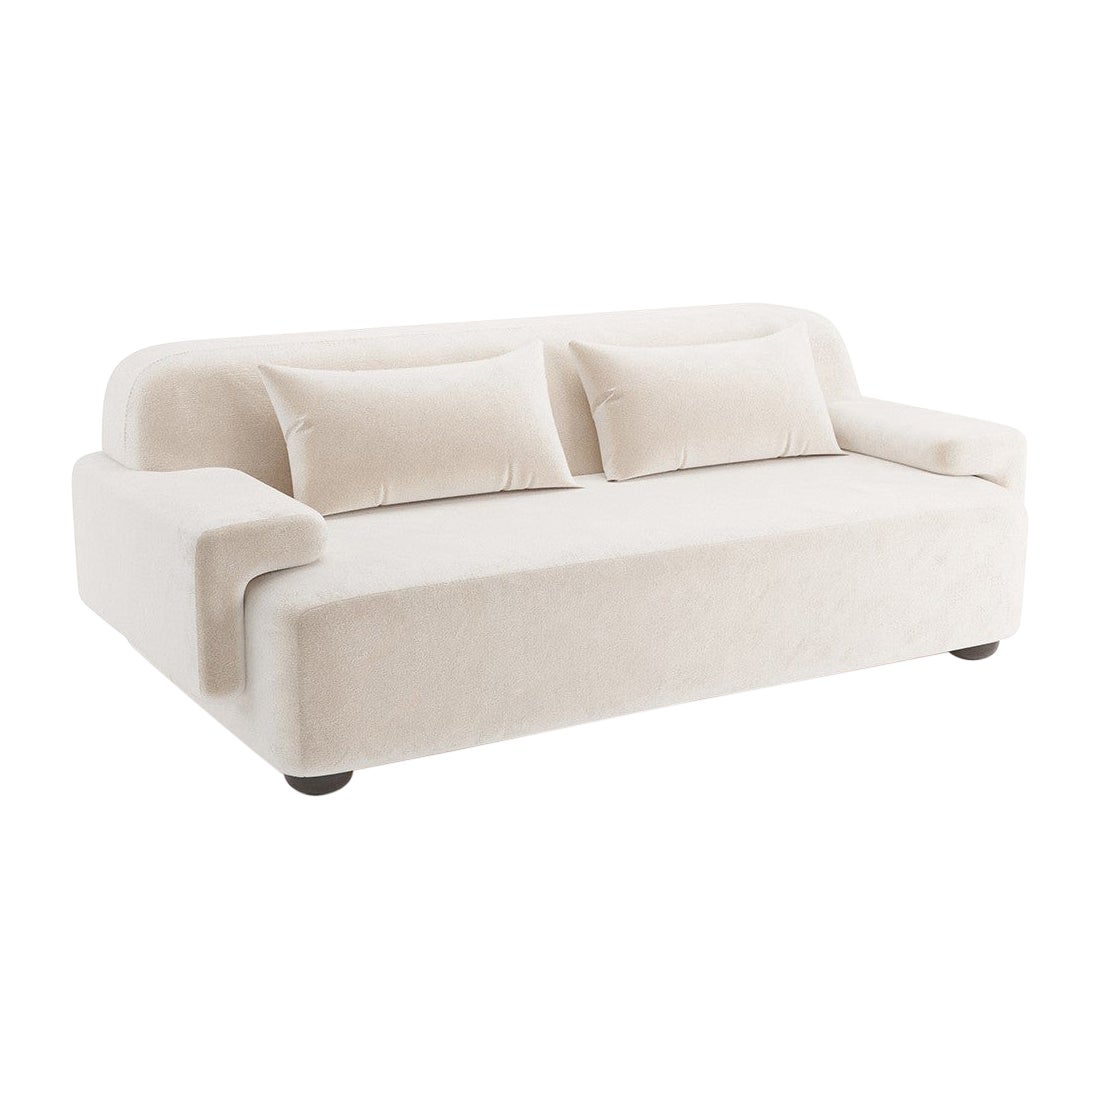 Popus Editions Lena 3 Seater Sofa in Egg Shell Off-White Como Velvet Fabric For Sale